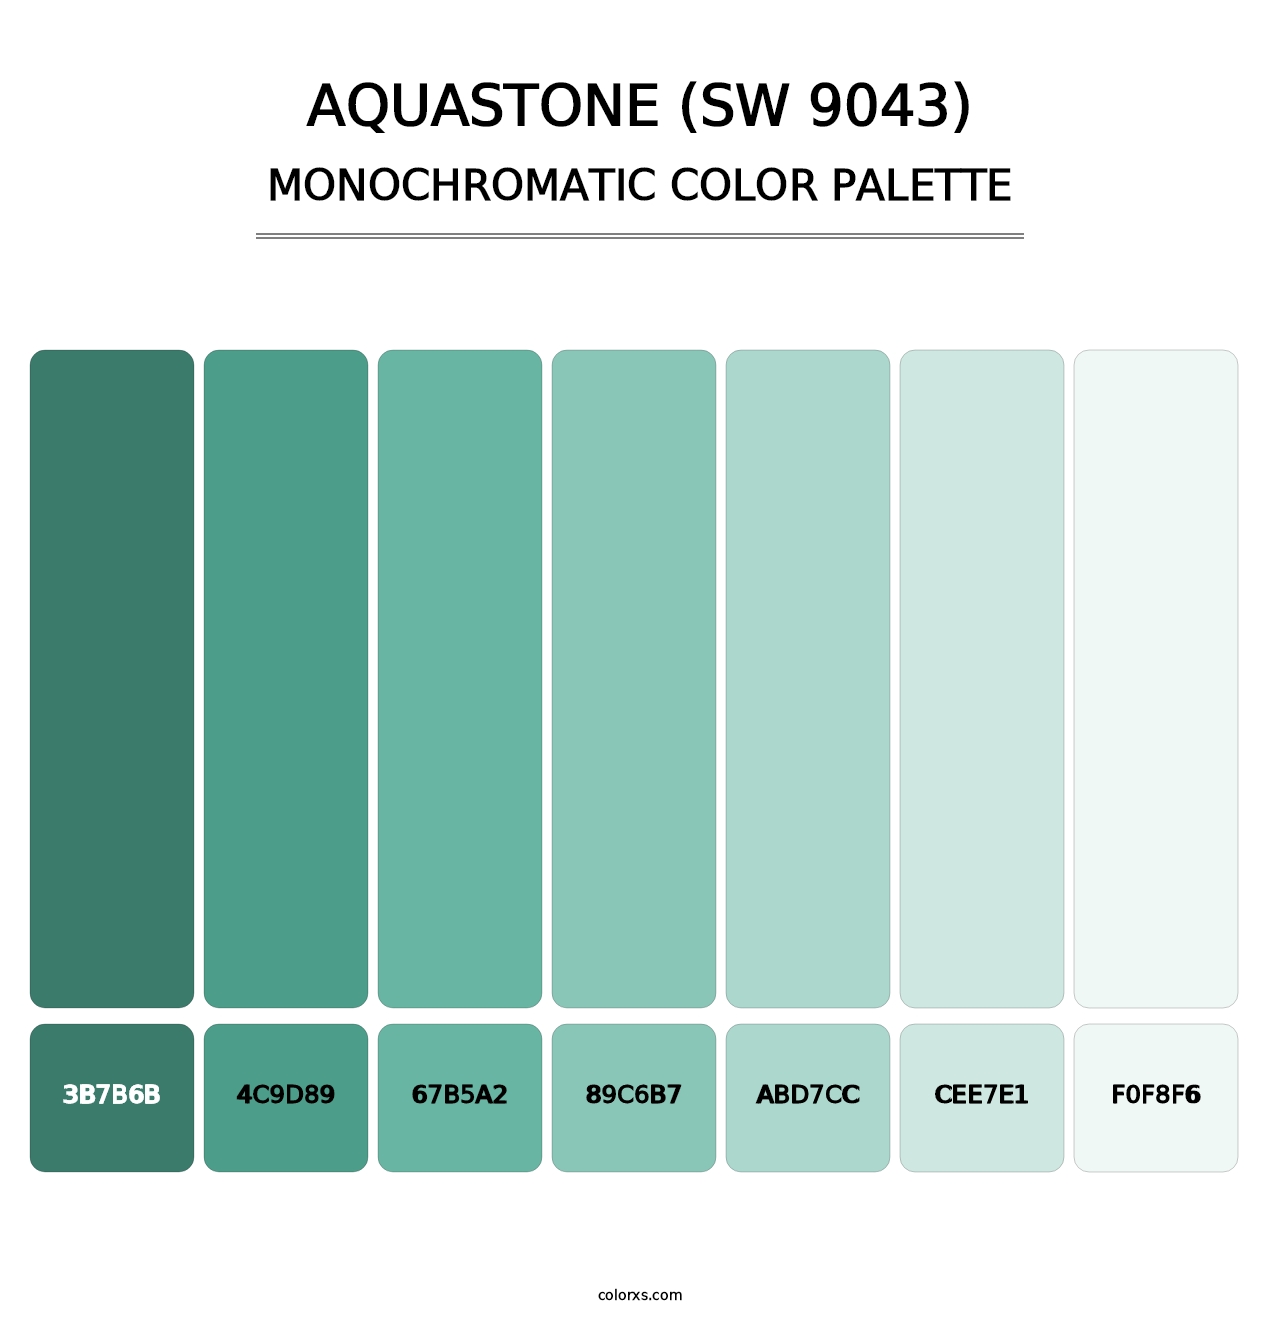 Aquastone (SW 9043) - Monochromatic Color Palette